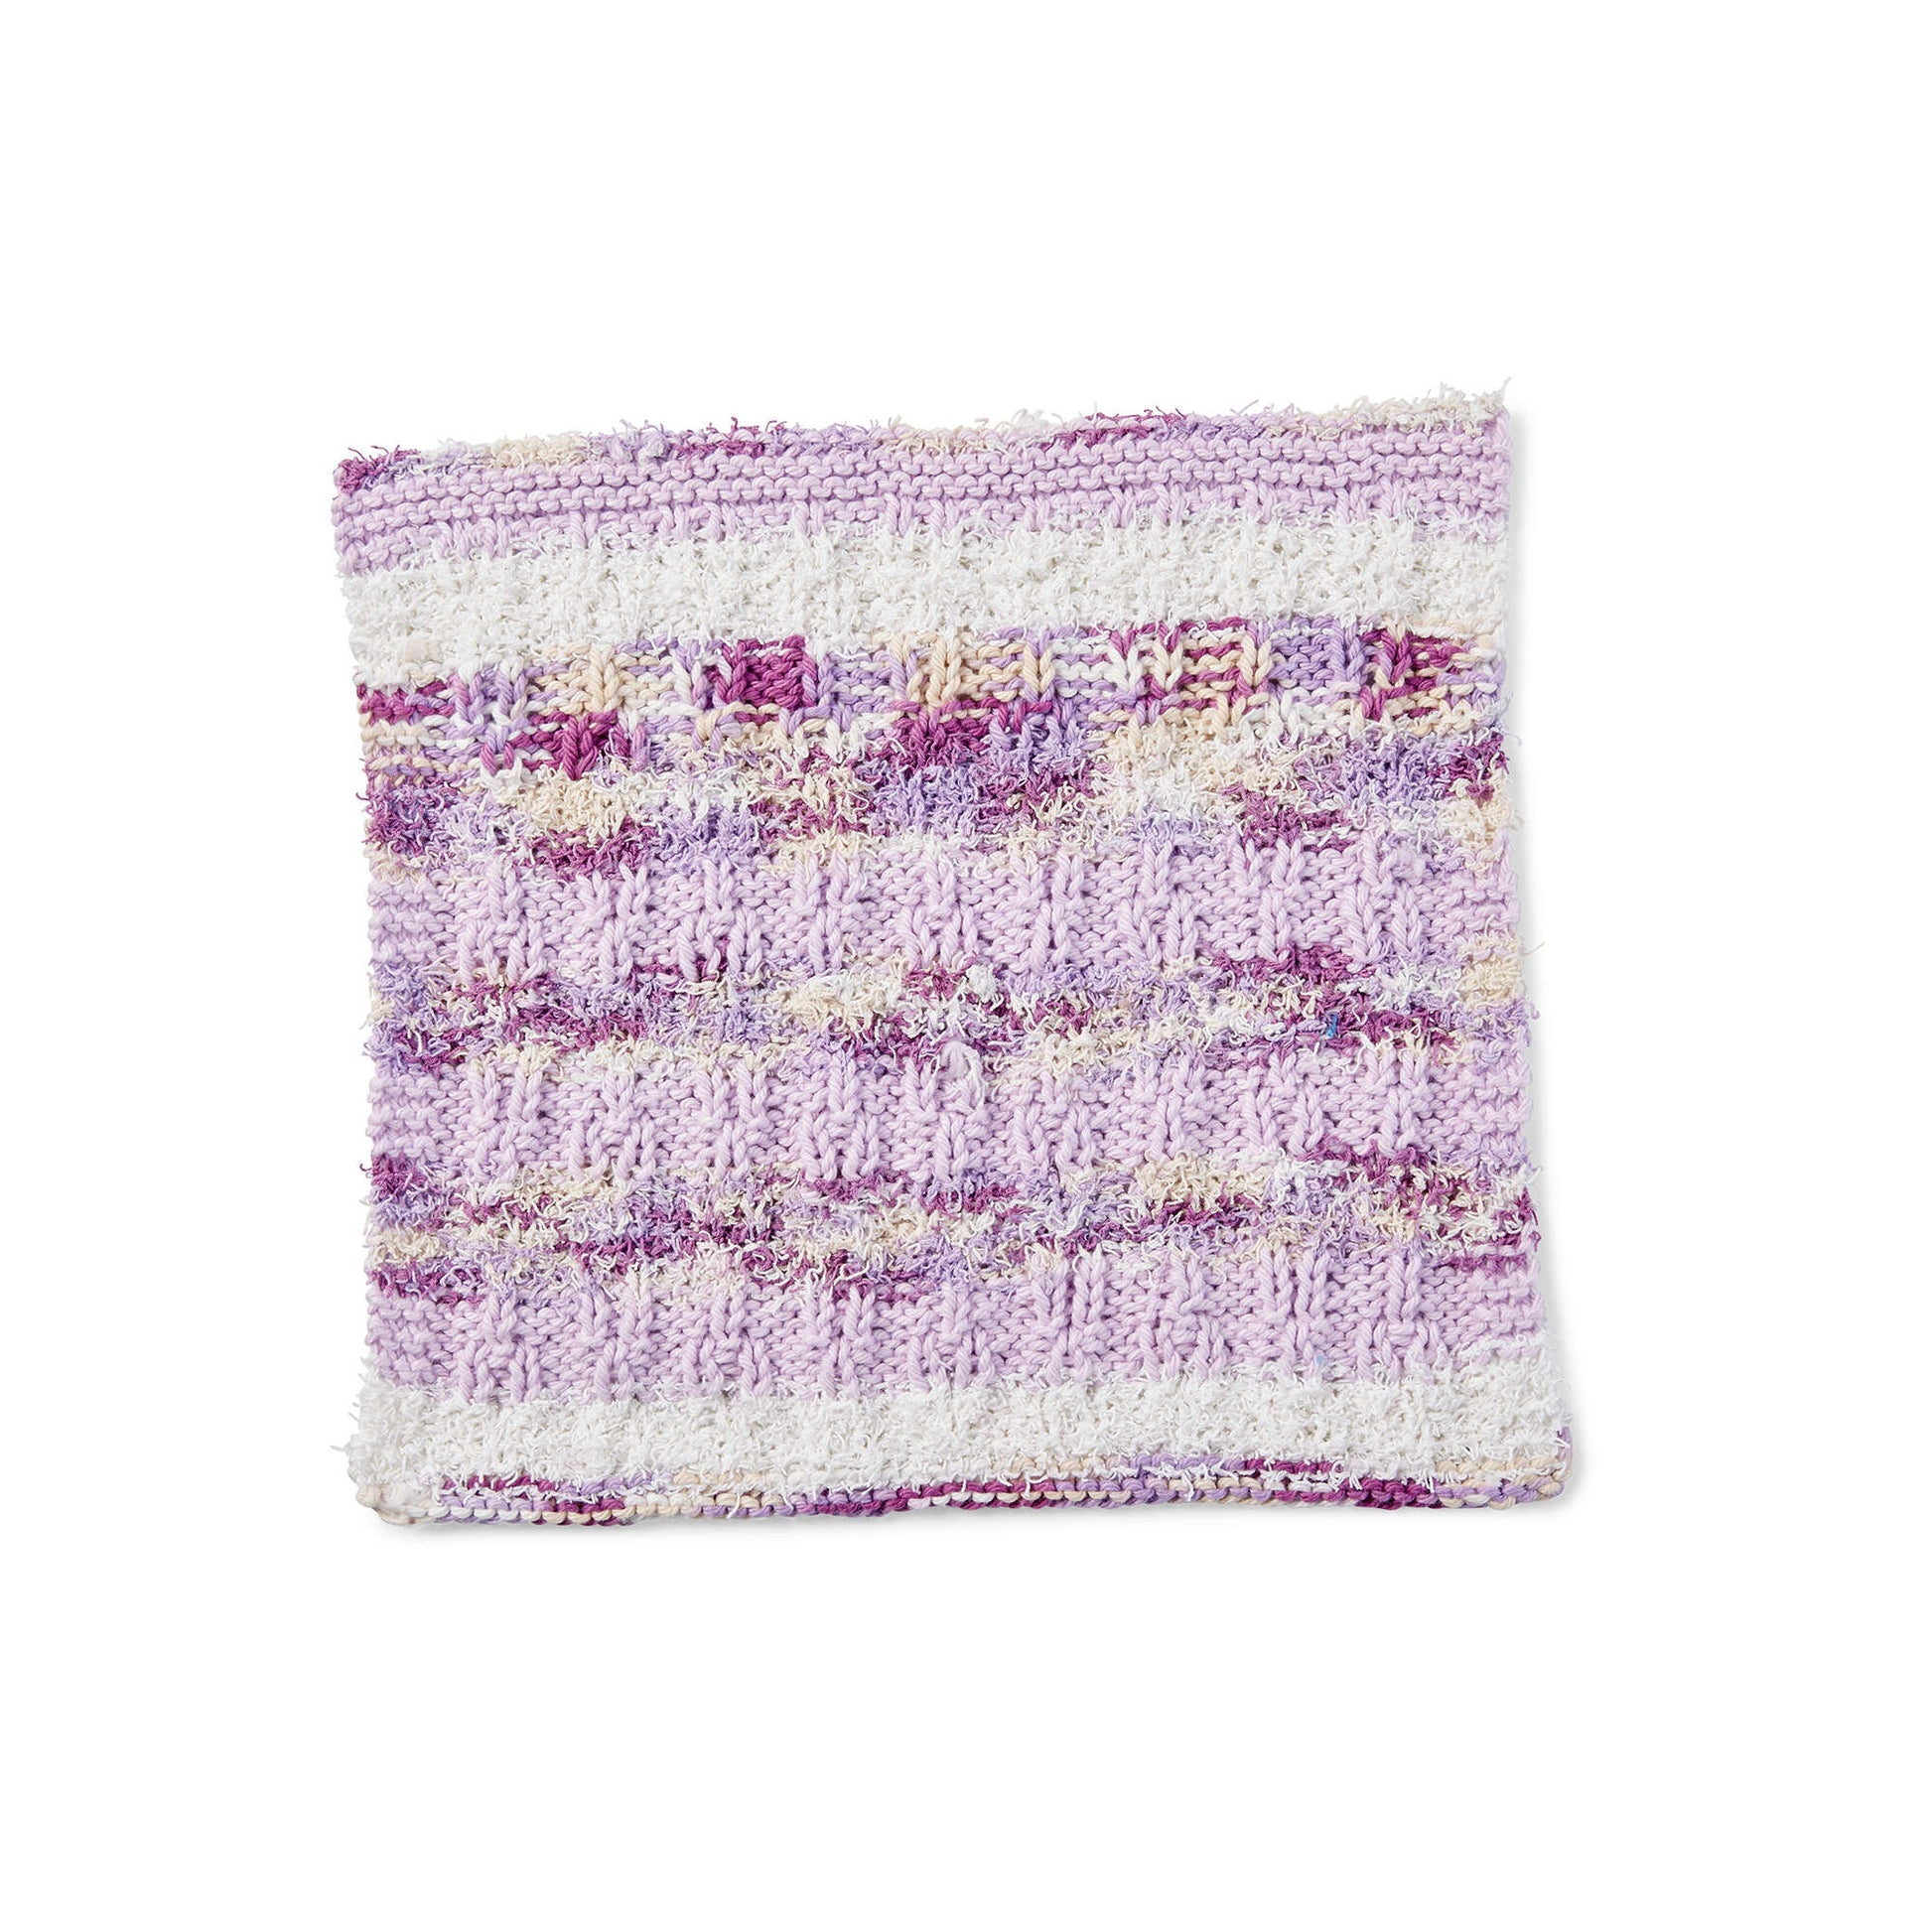 Free Lily Sugar'n Cream Tidy Up Knit Dishcloth Pattern